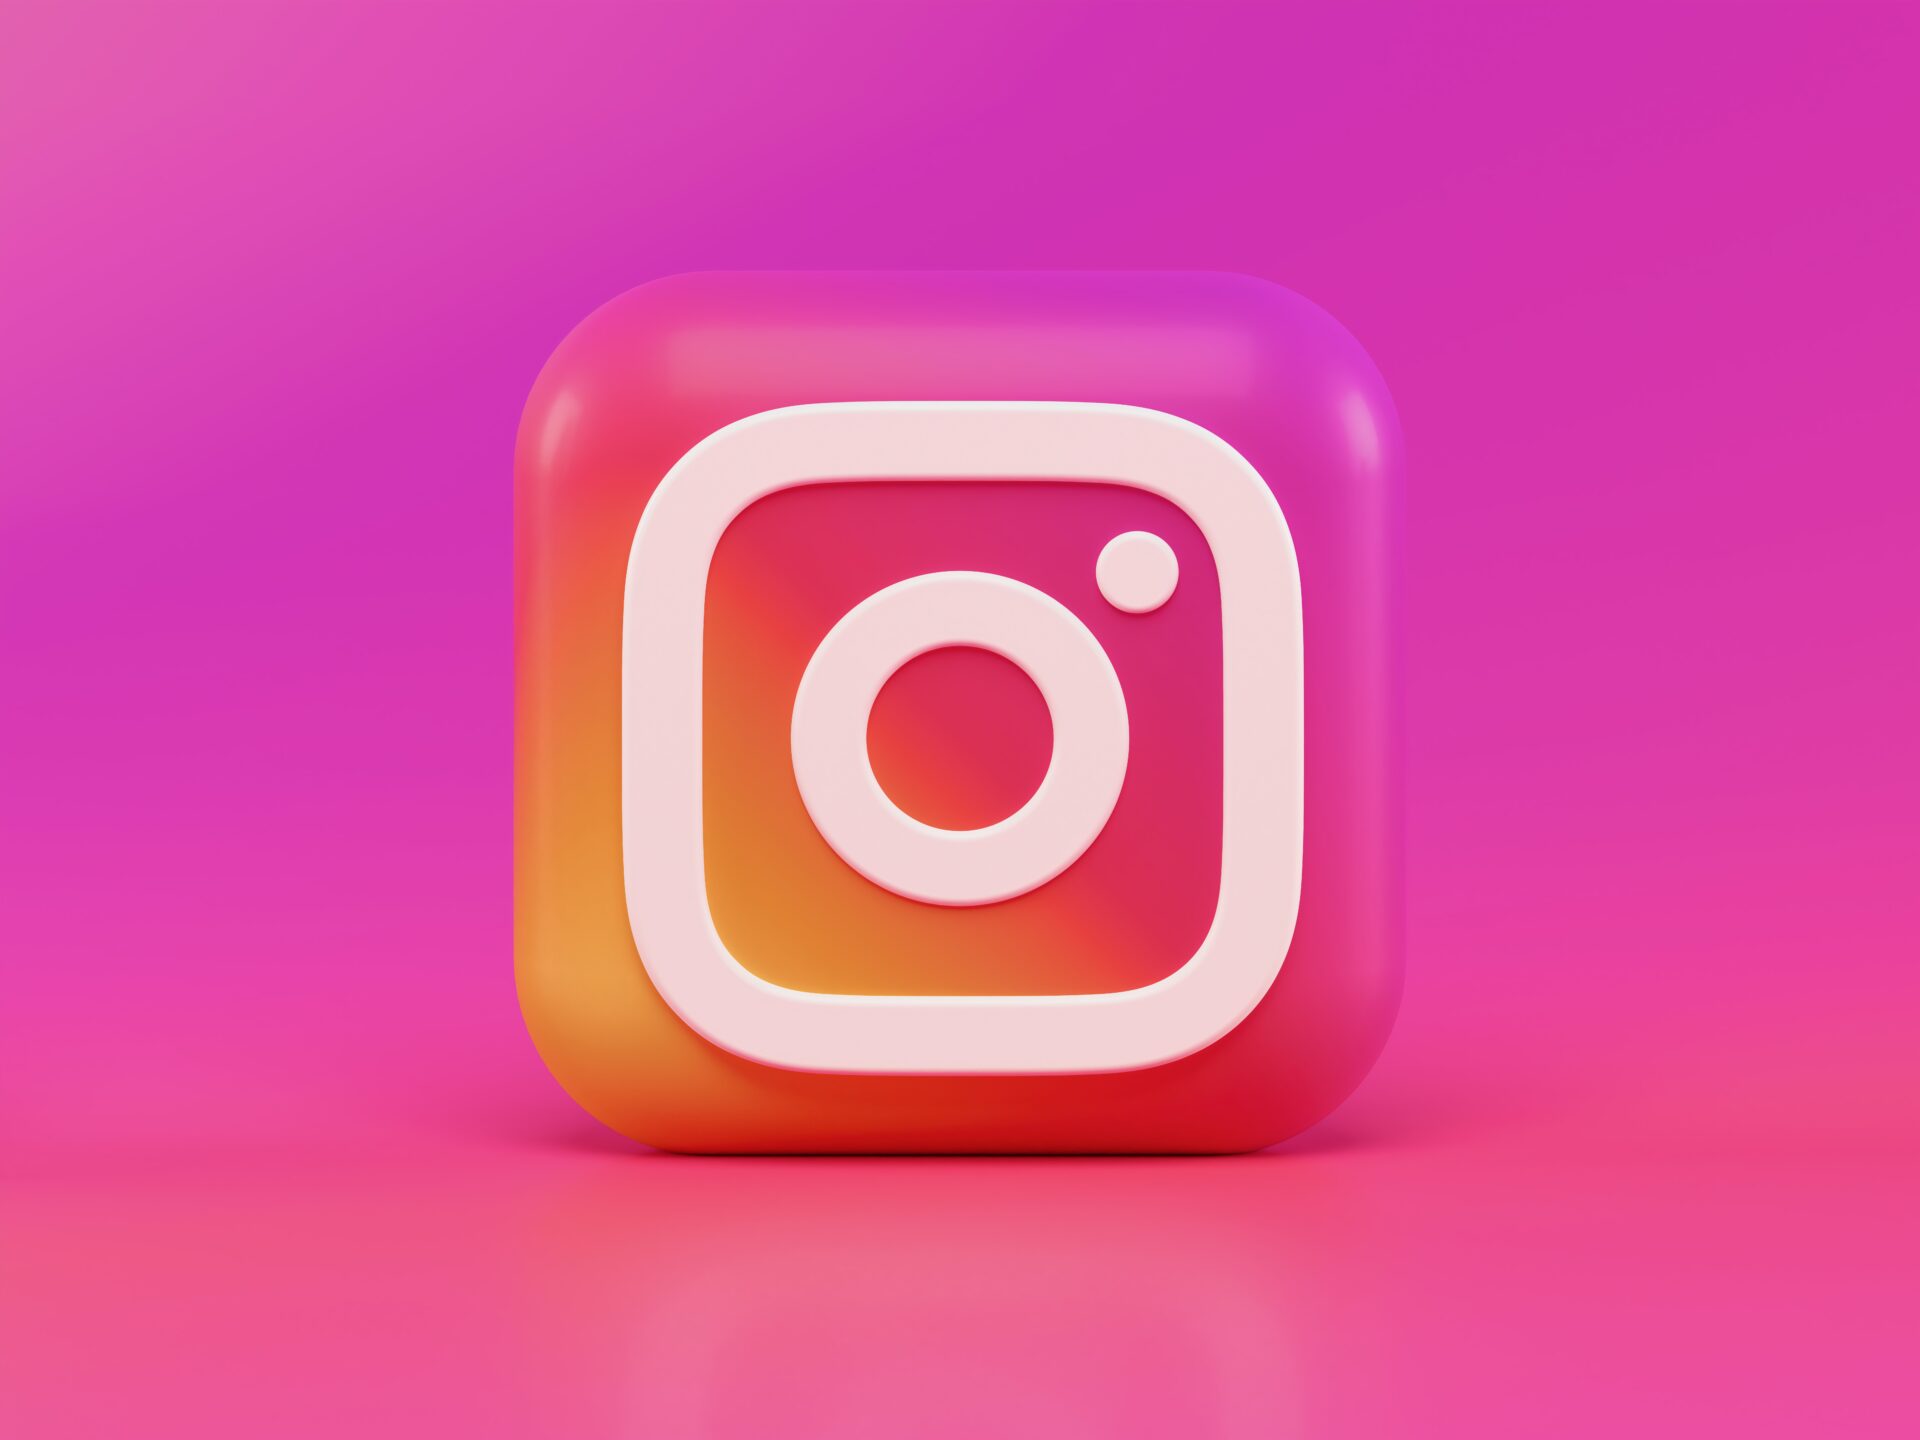 Instagram icon on bright pink background